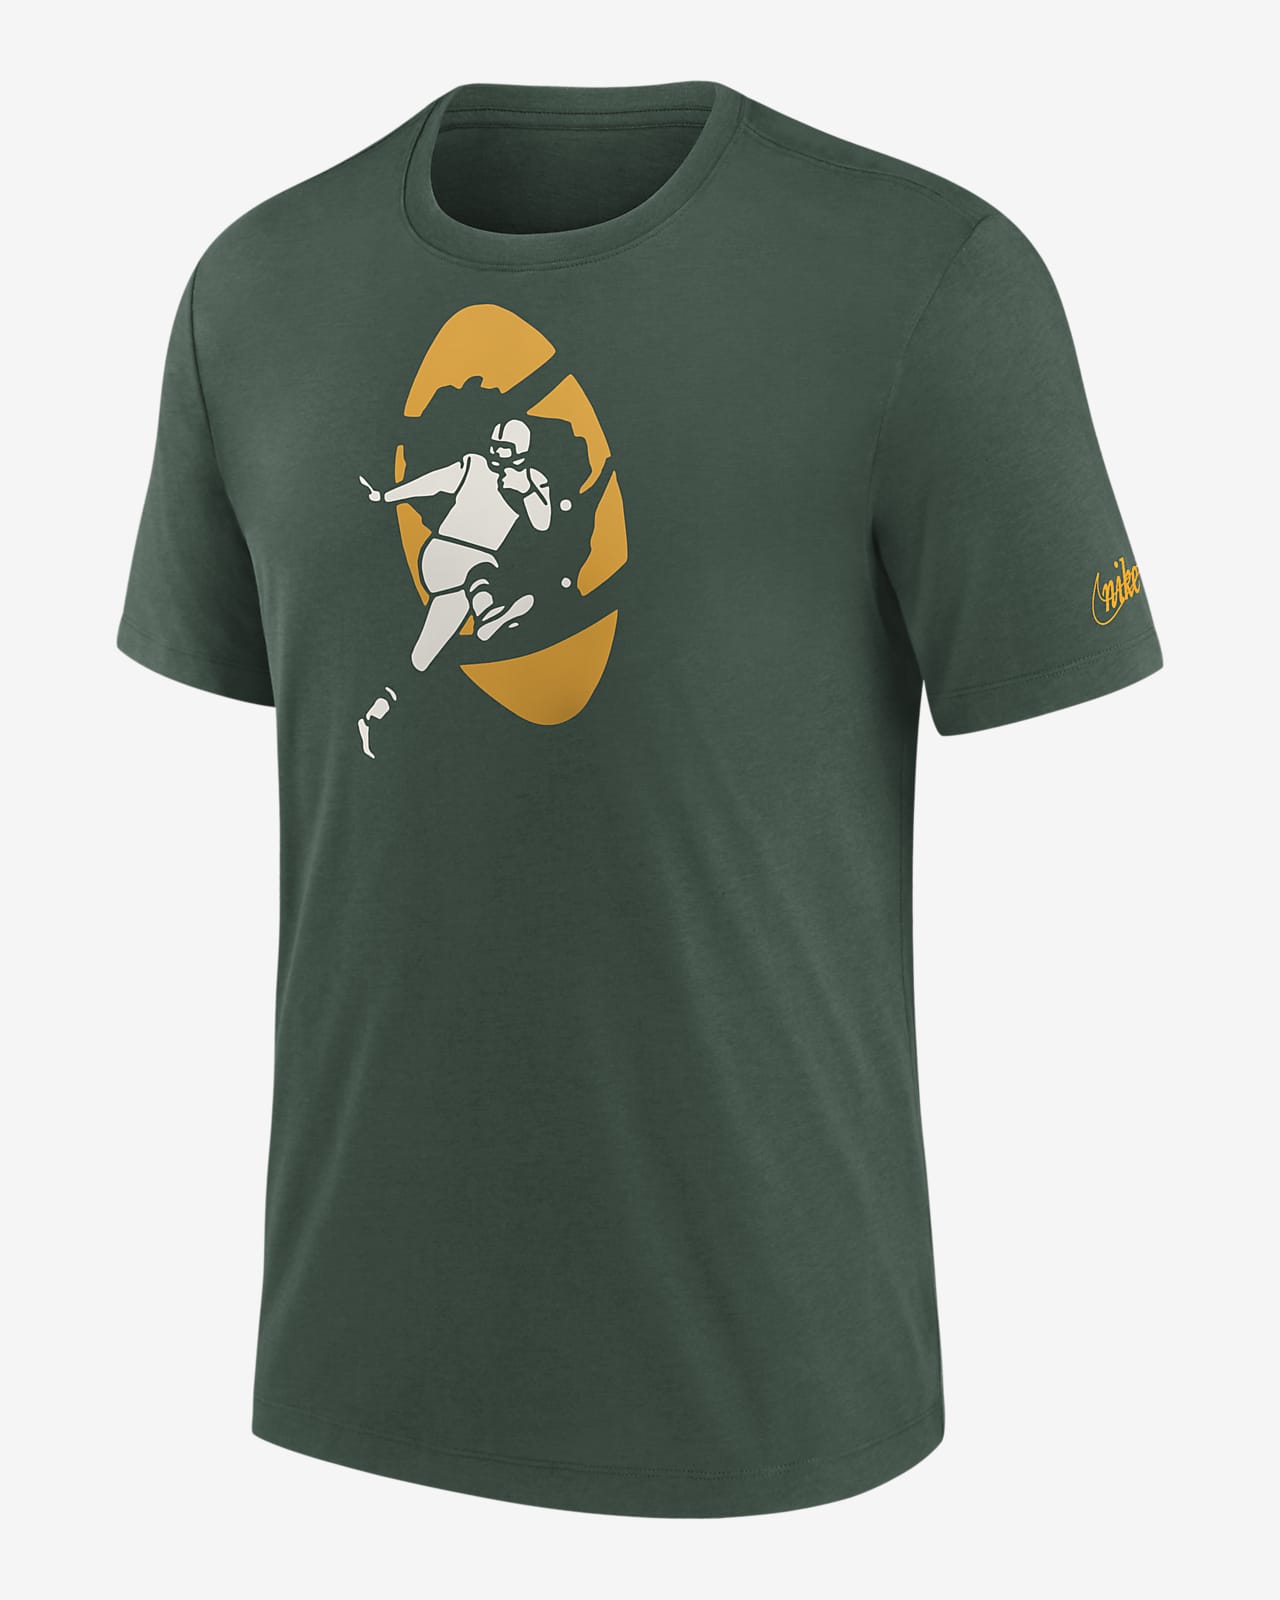 Green Bay Packers Rewind Logo Men's Nike NFL T-Shirt